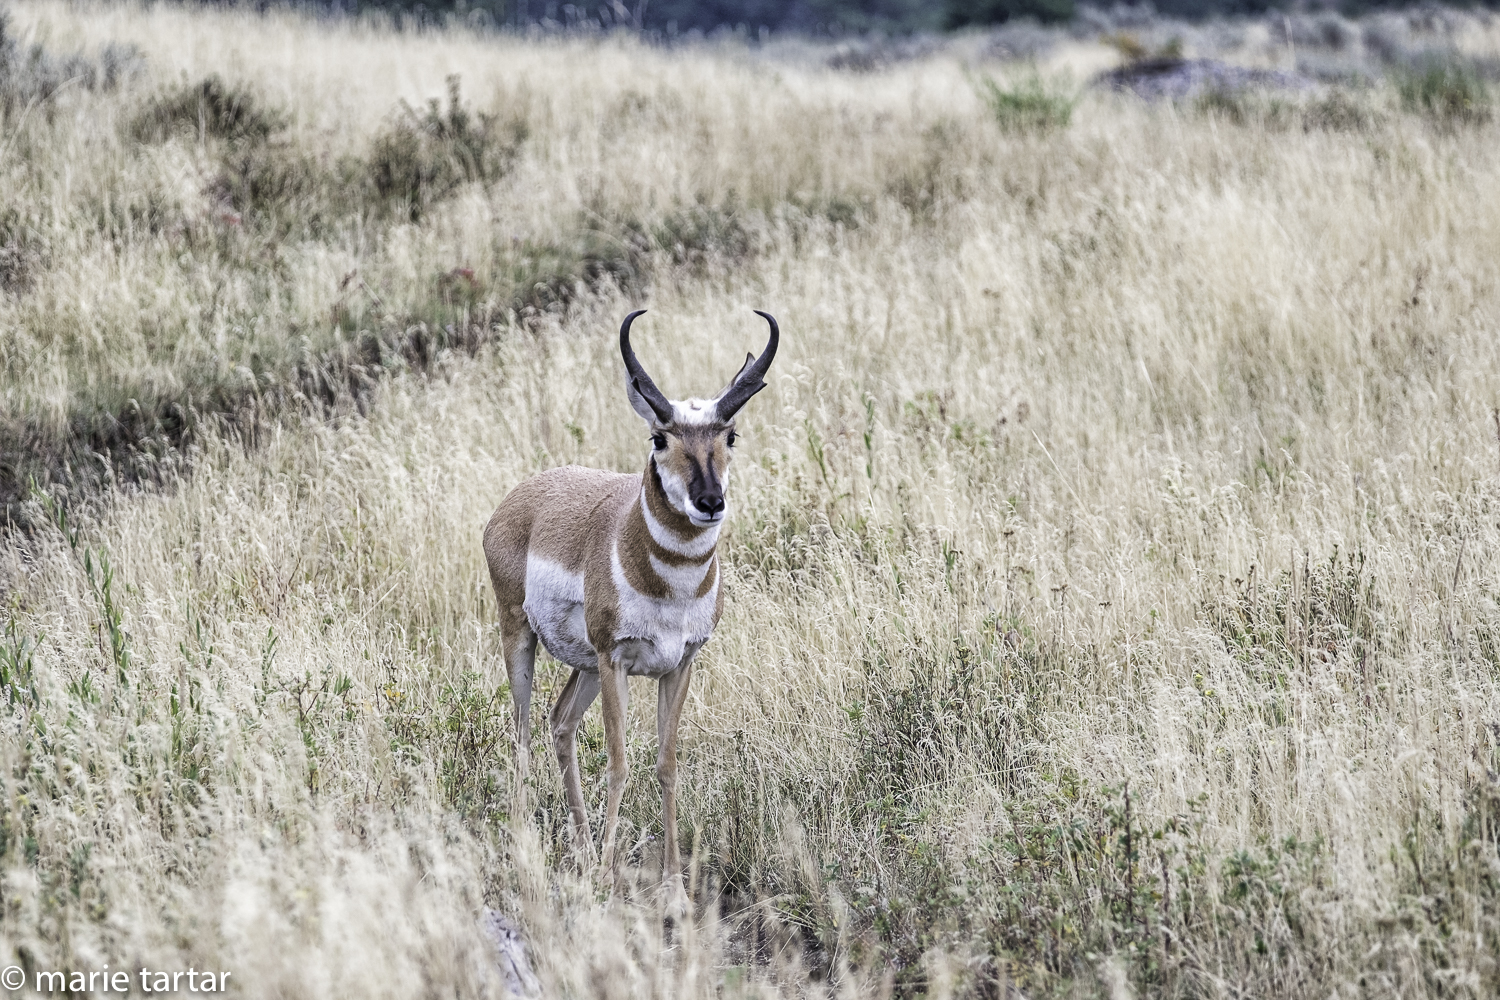 Pronghorn antelope in Lamar Valley region of Yellowstone